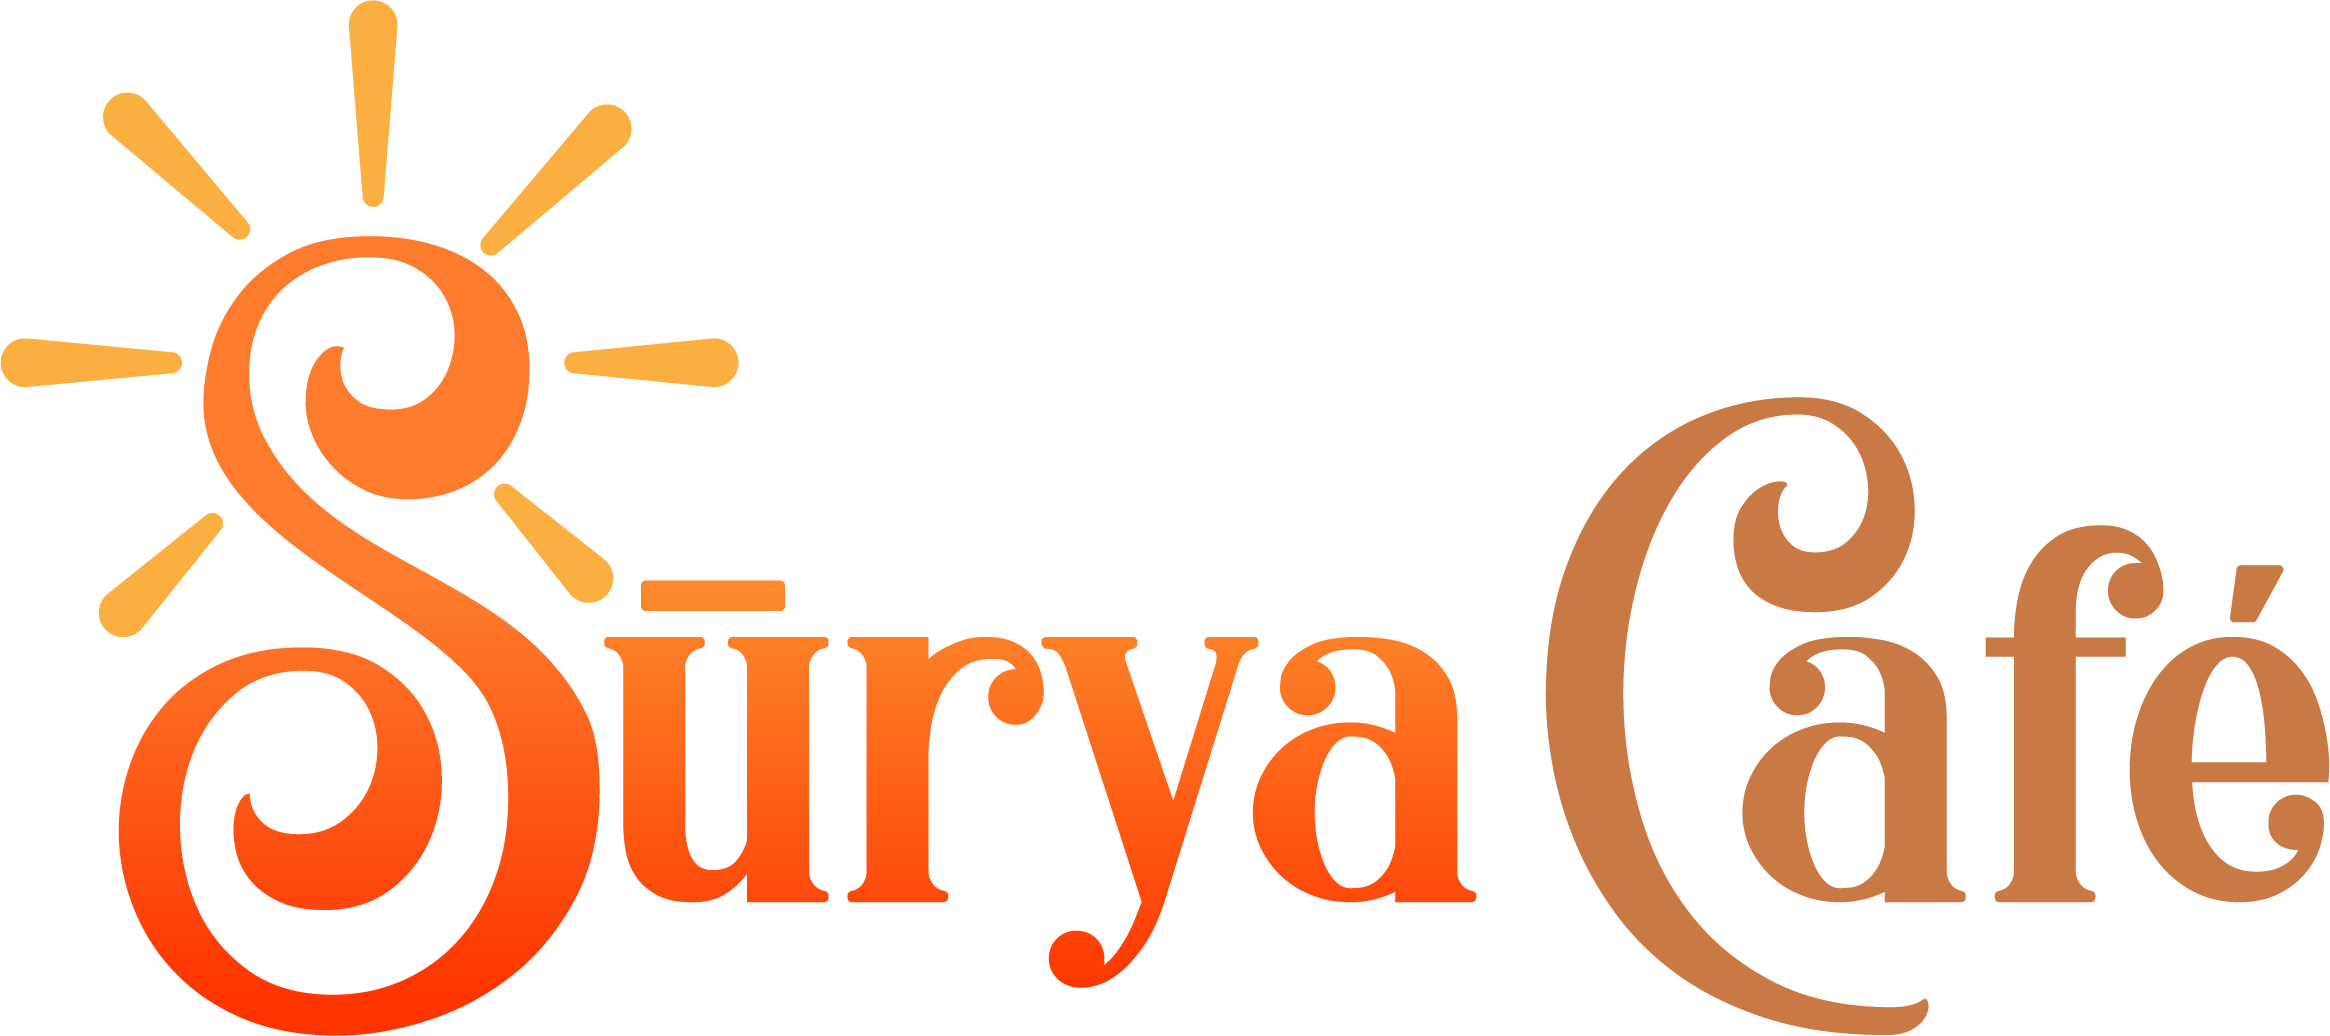 Surya Cafe